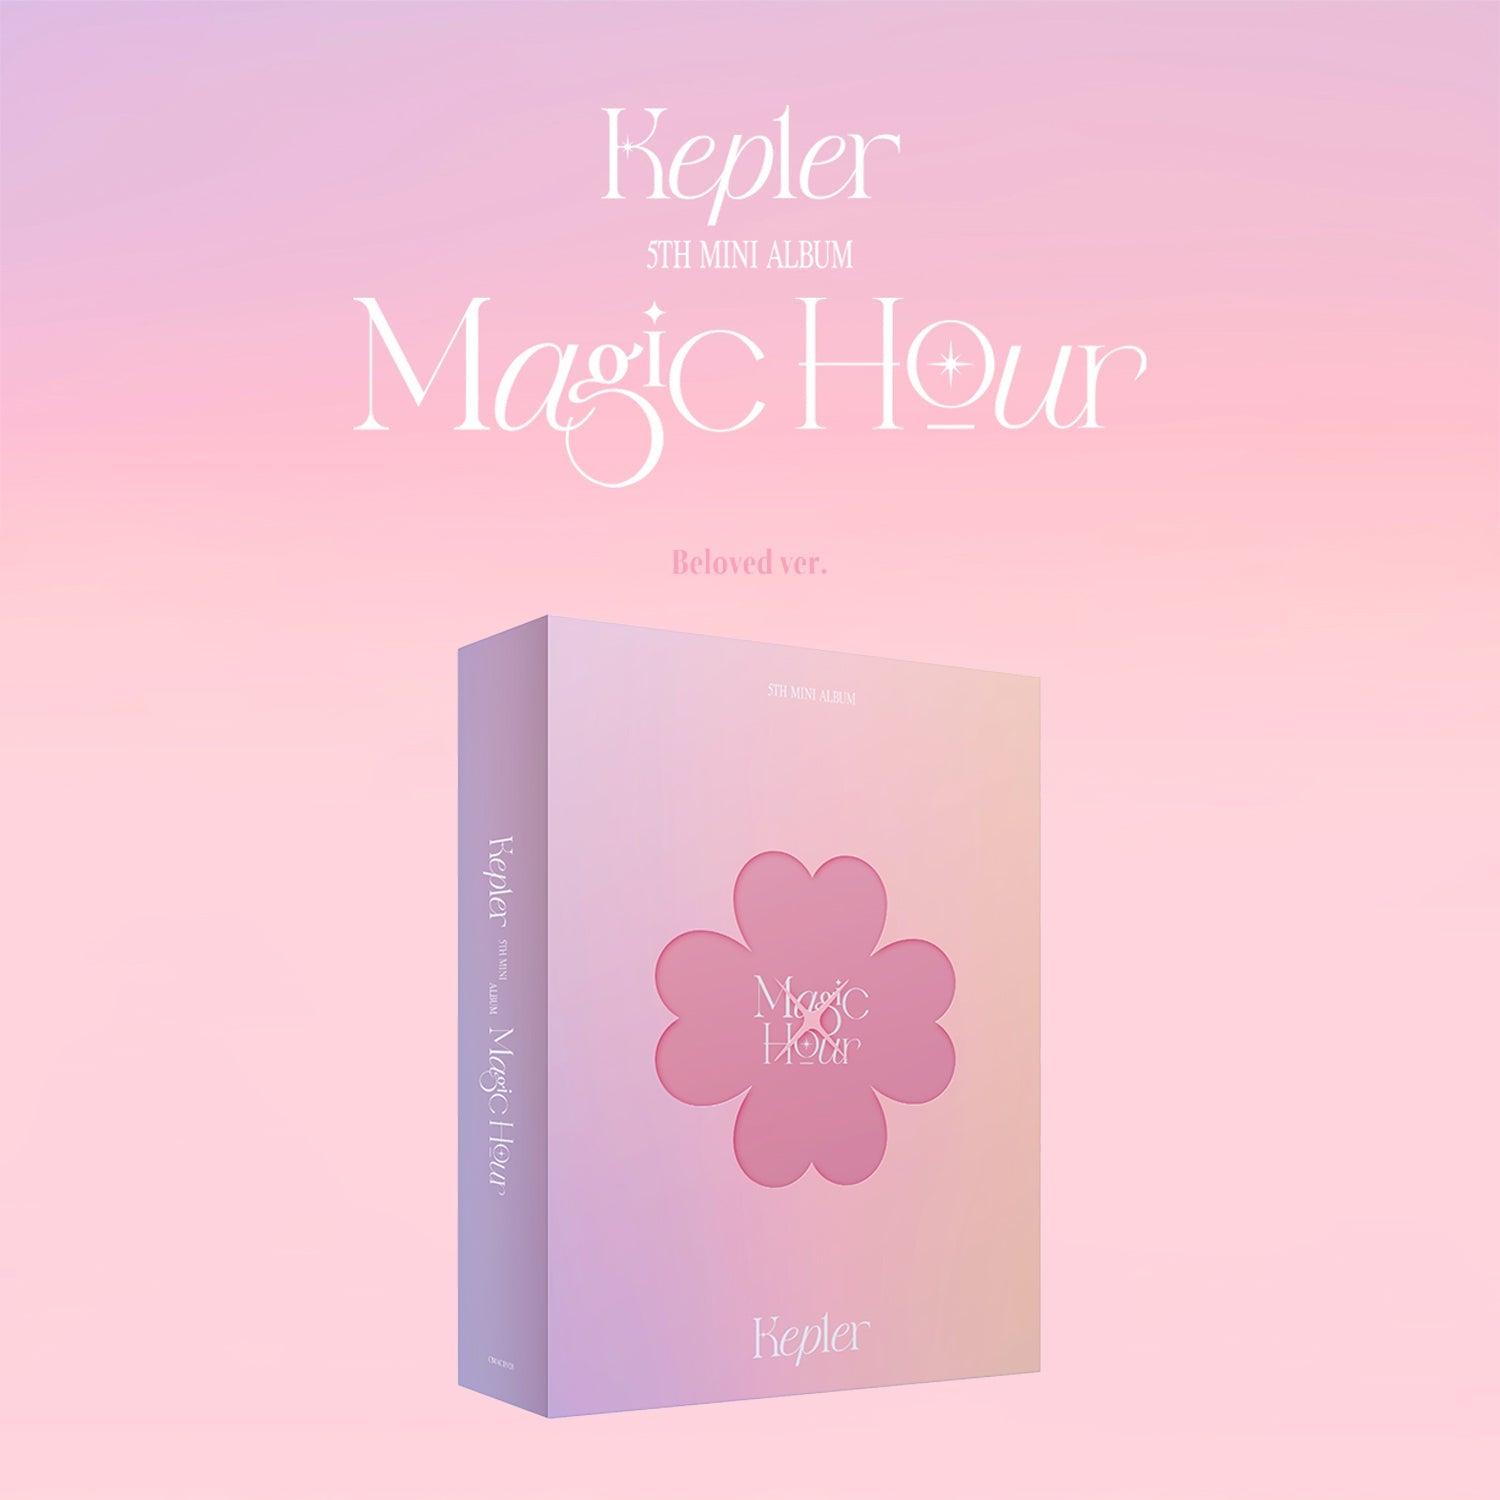 KEP1ER 5TH MINI ALBUM 'MAGIC HOUR' BELOVED VERSION COVER